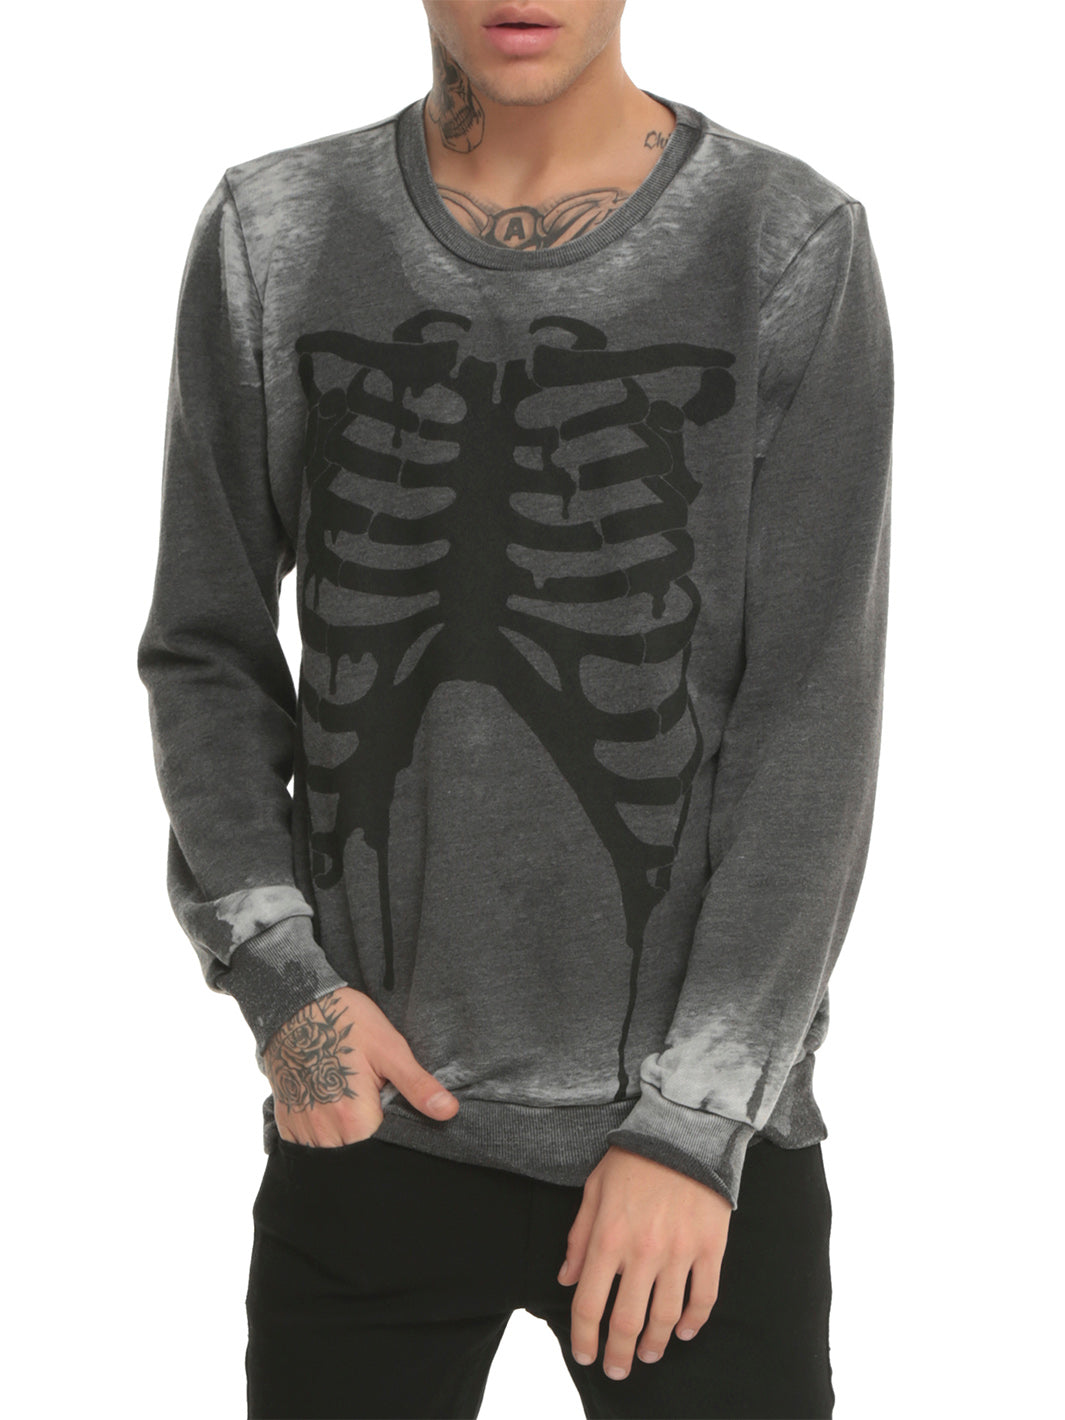 grey sweatshirt with rib cage graphic